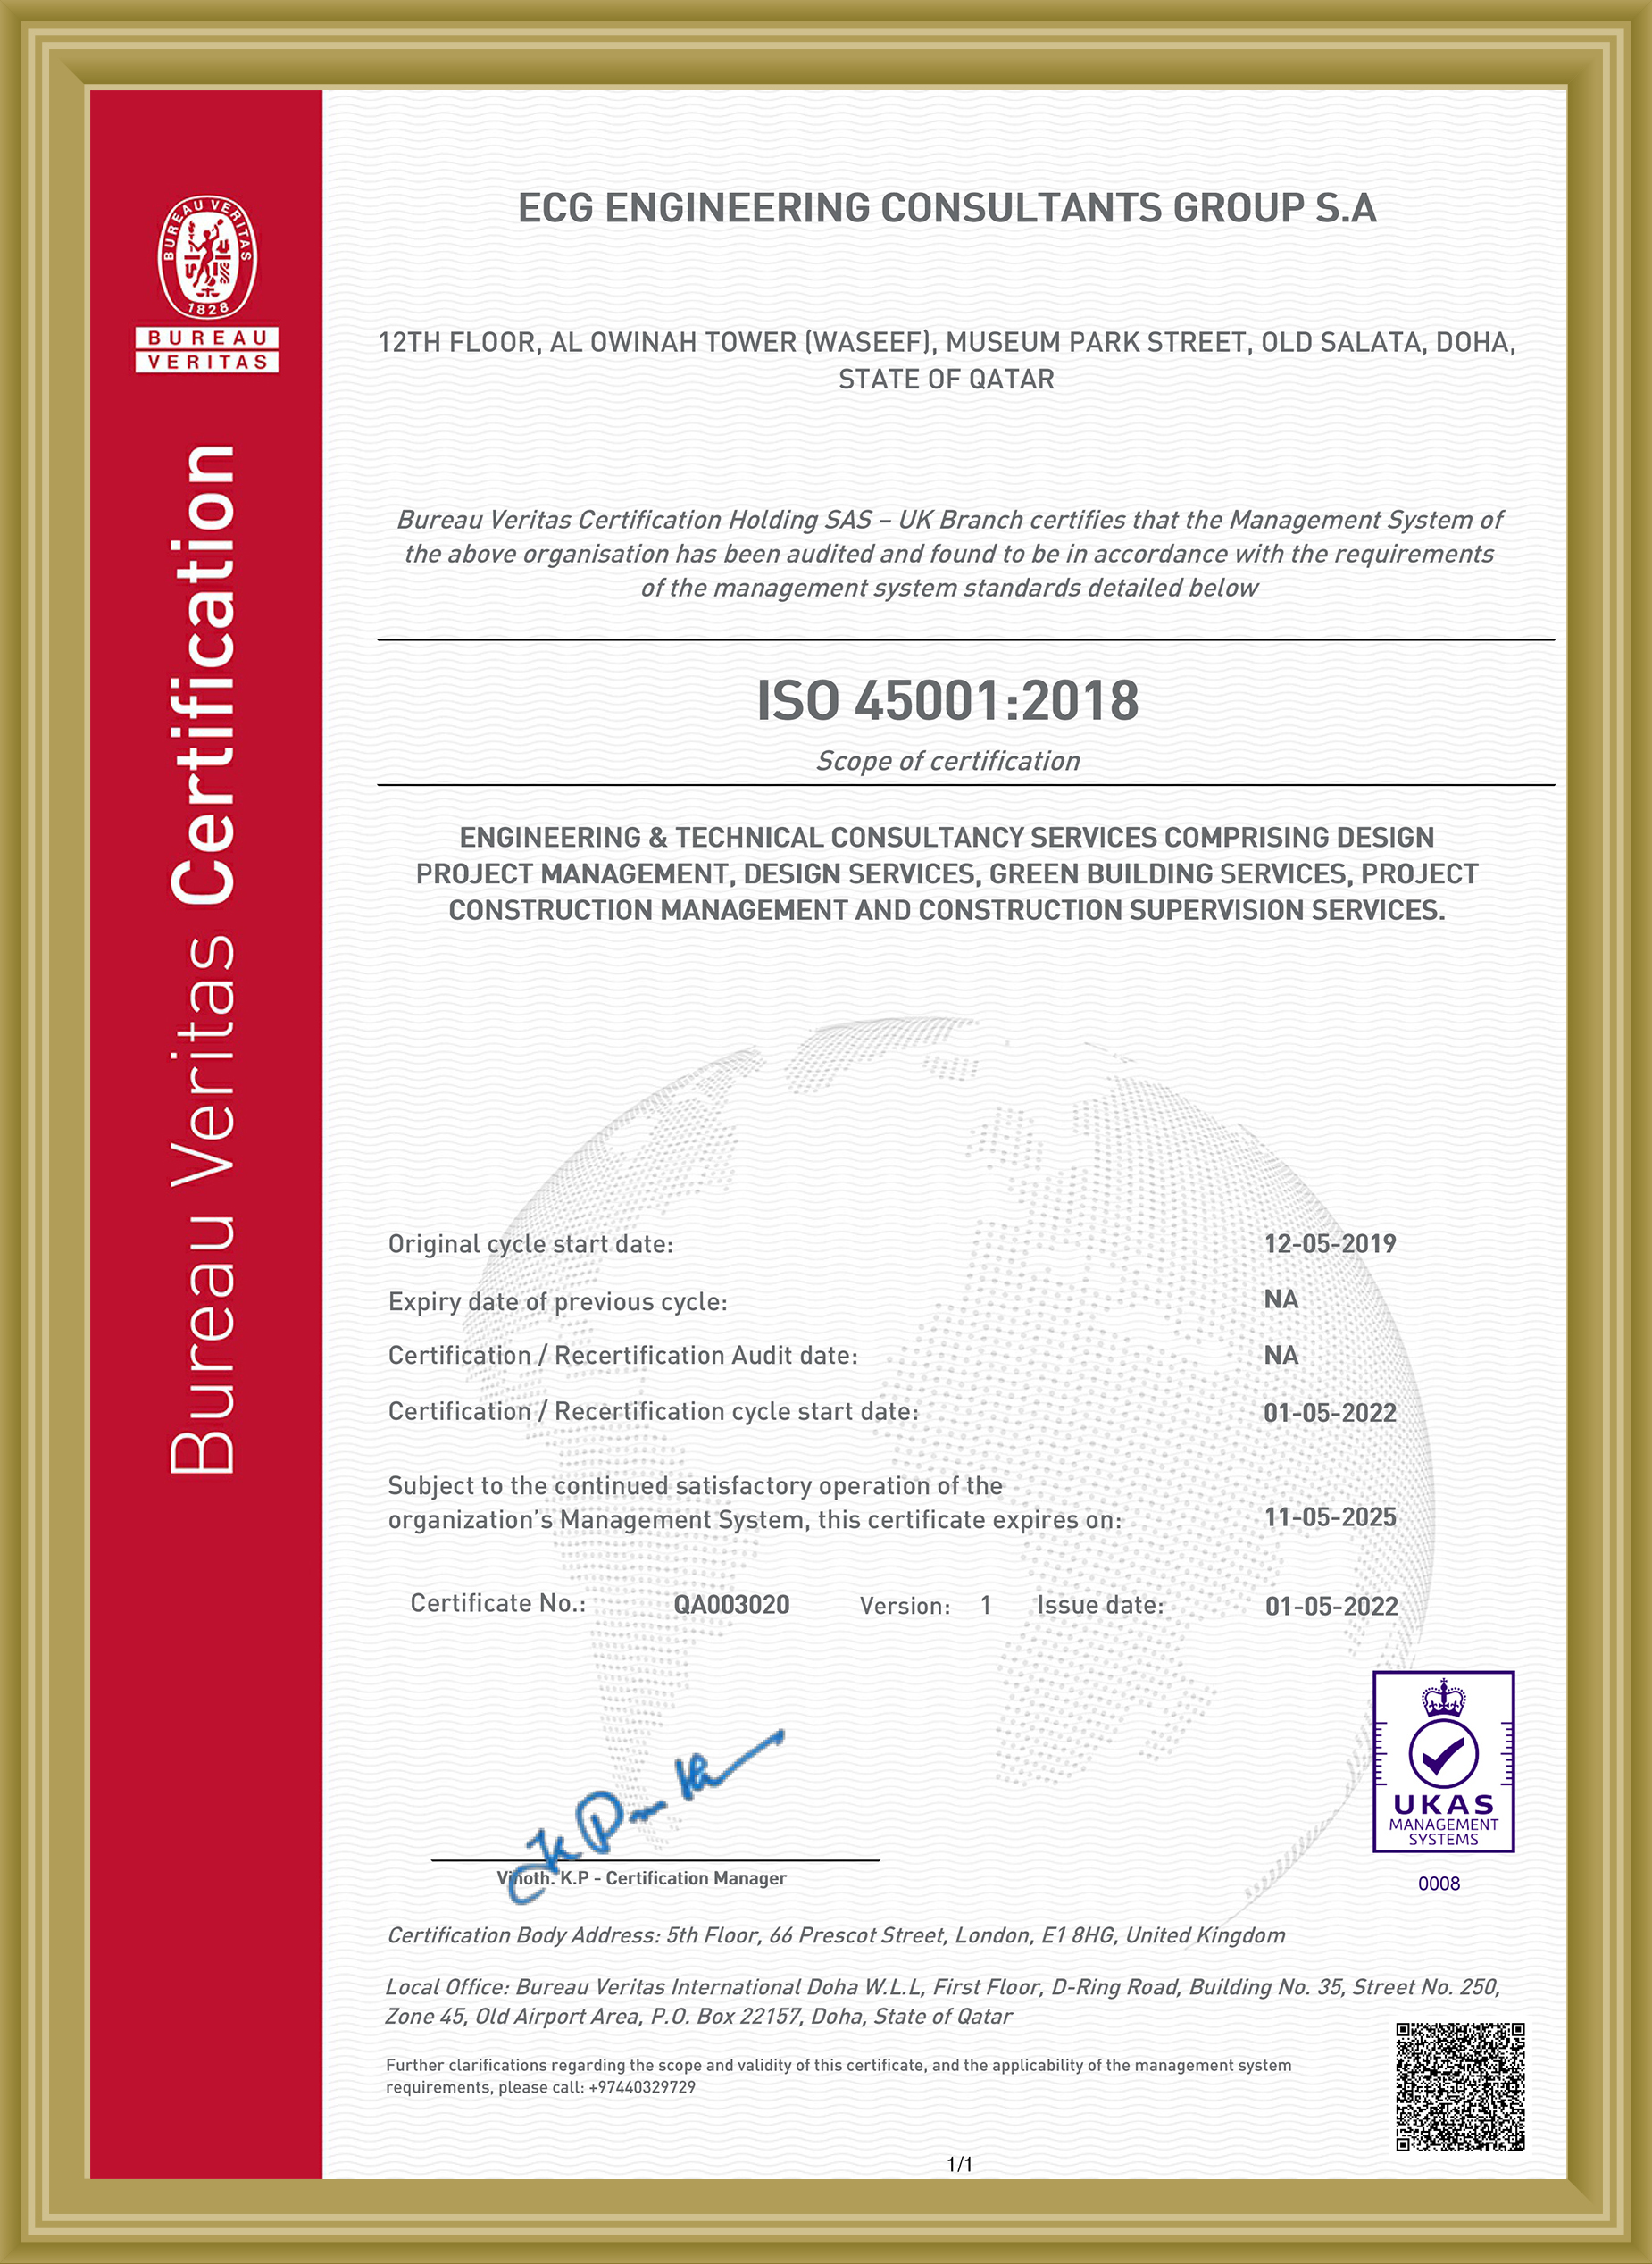 ECG QATAR Certificate ISO 45001 2018